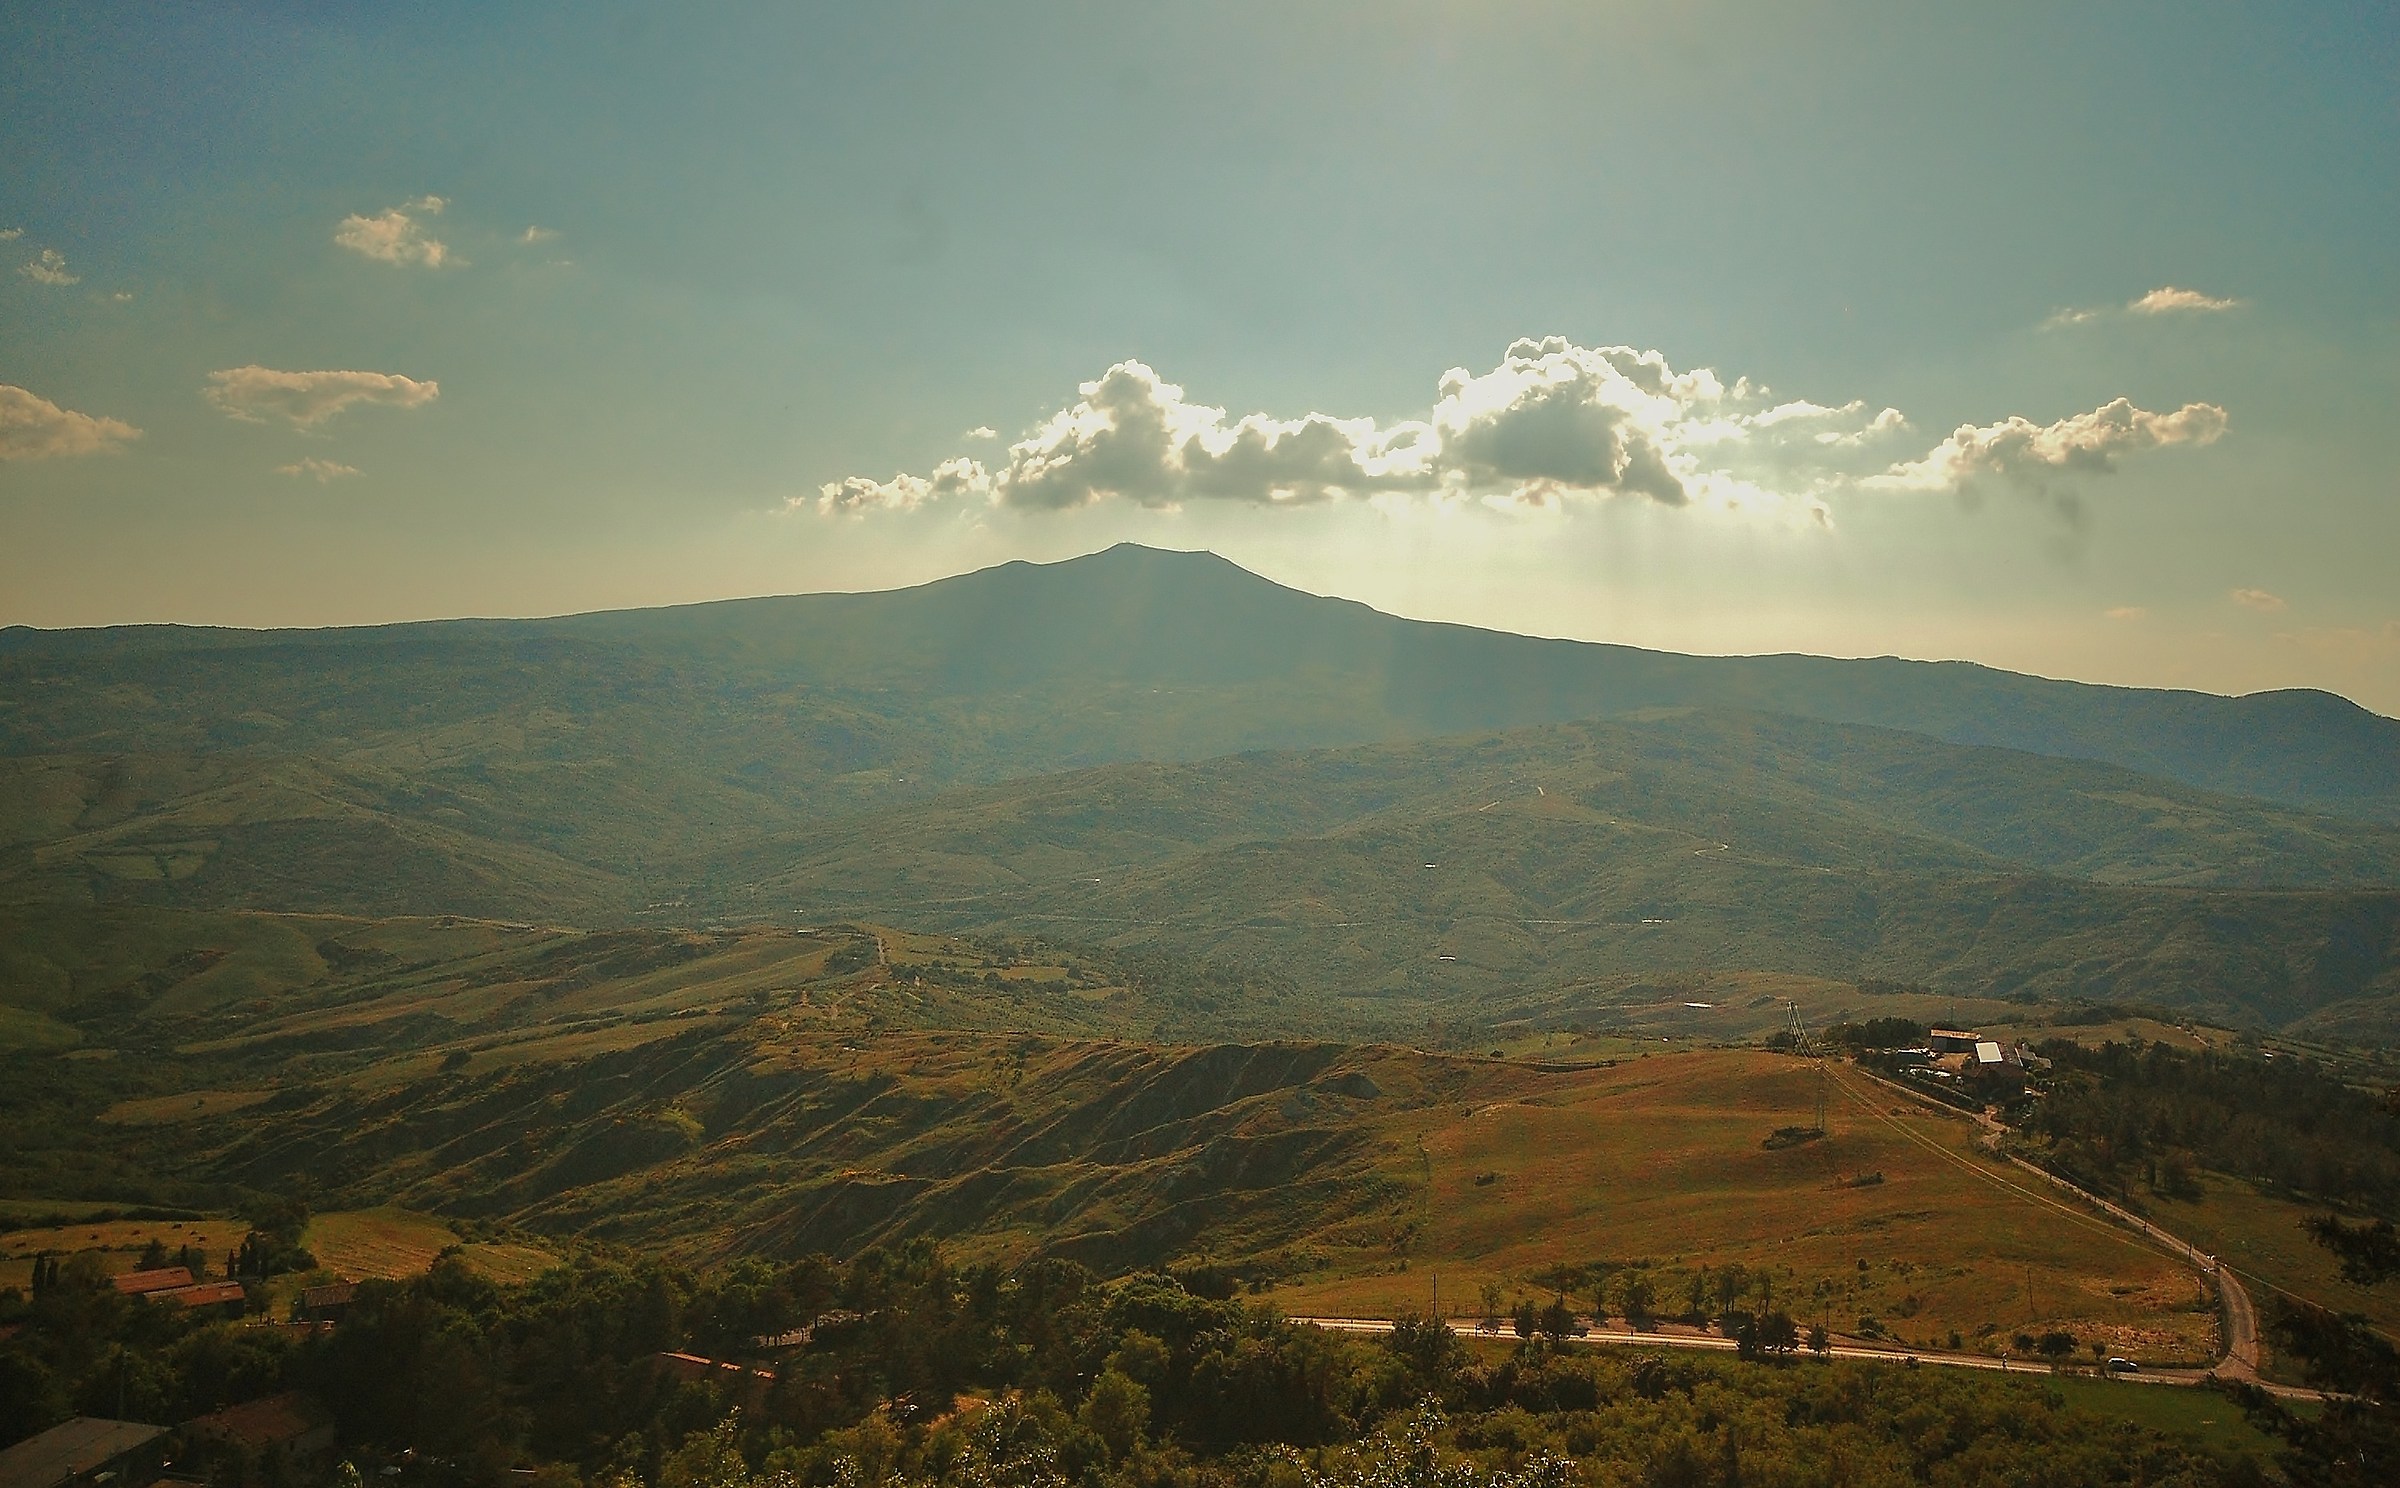 The Monte Amiata seen from Radicofani...